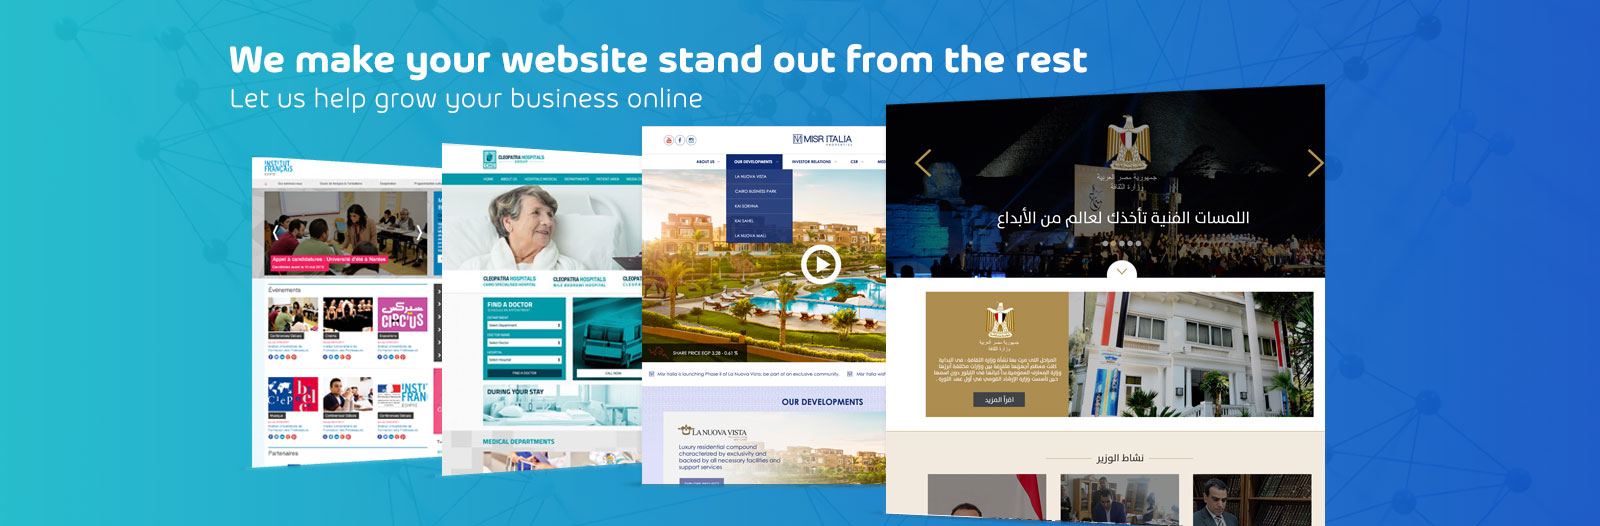 NetWave | Web design and development - Egypt